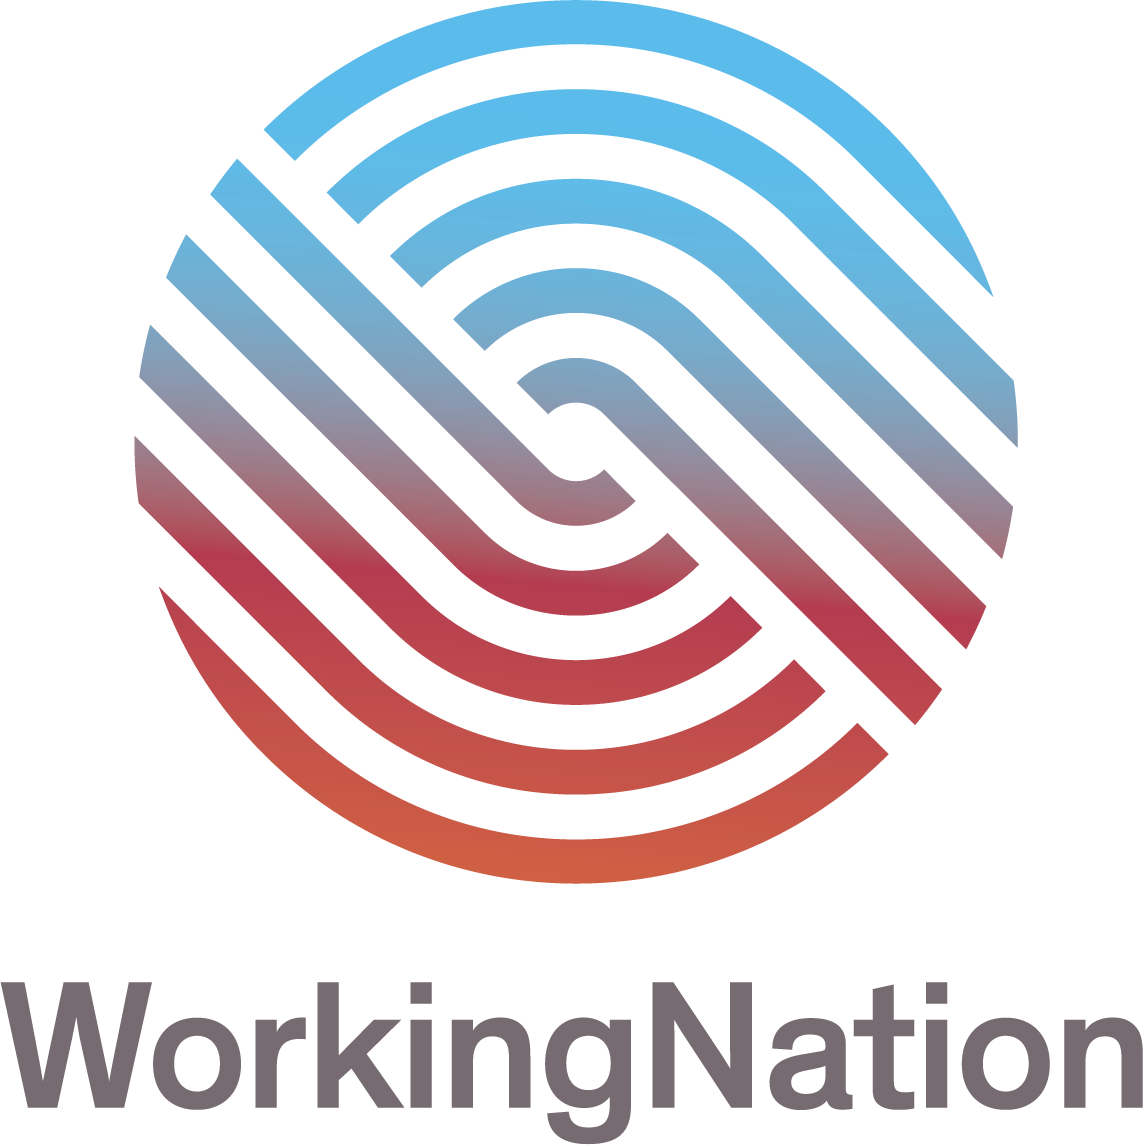 WorkingNation-logo 2.png